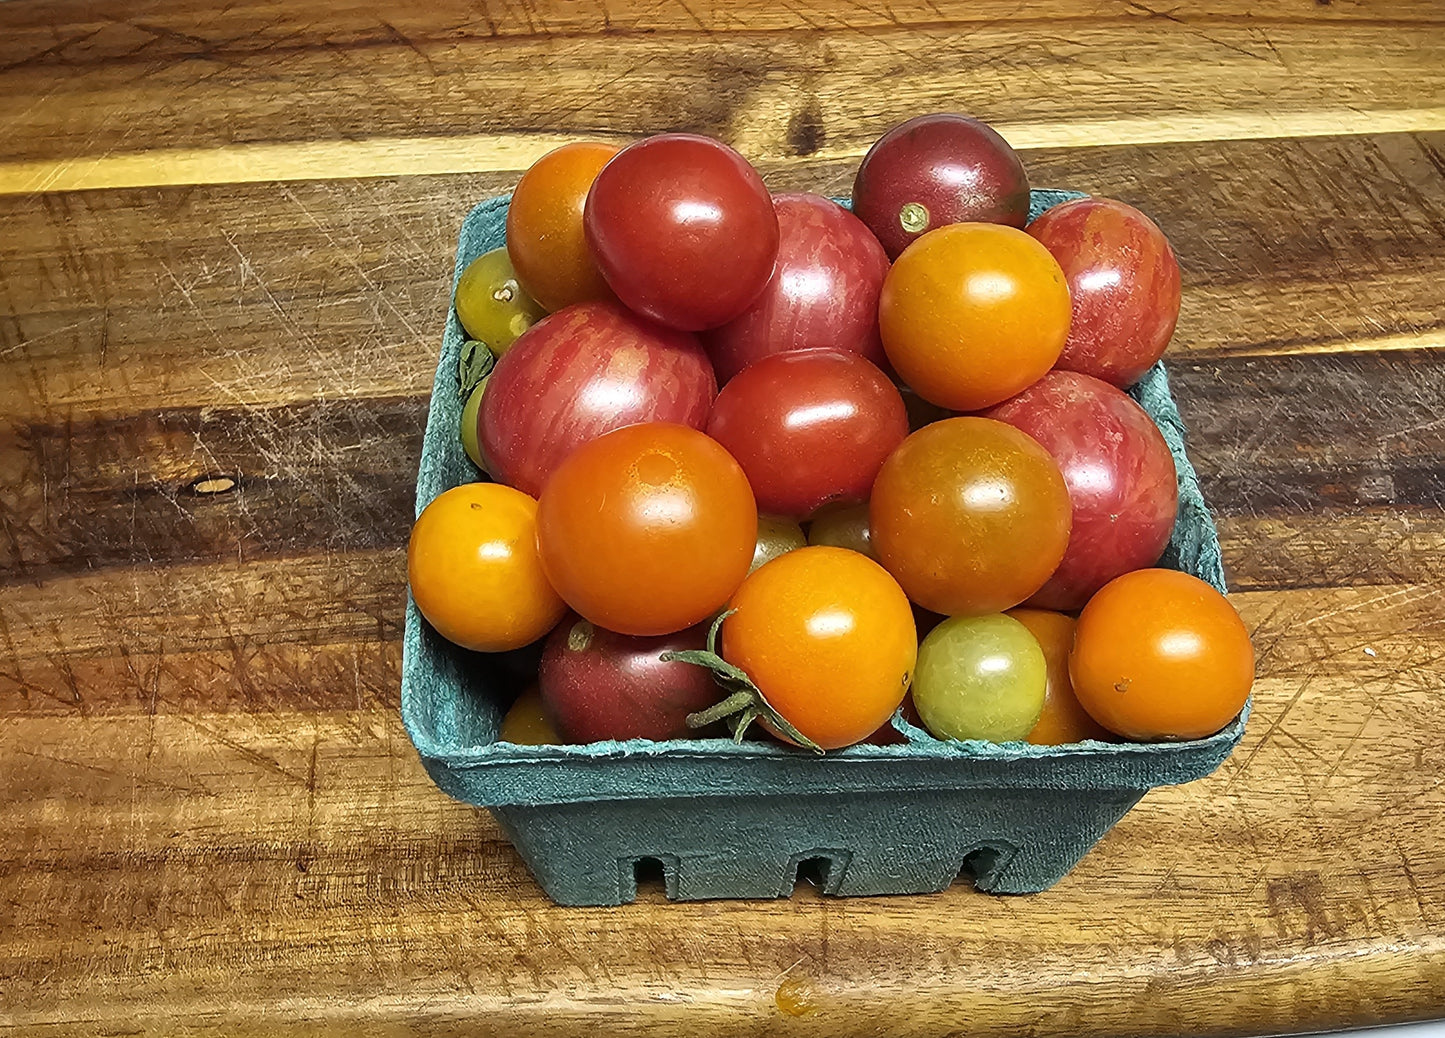 Tomatoes - Wondrous Farm basket of many-colored Cherry Tomatoes